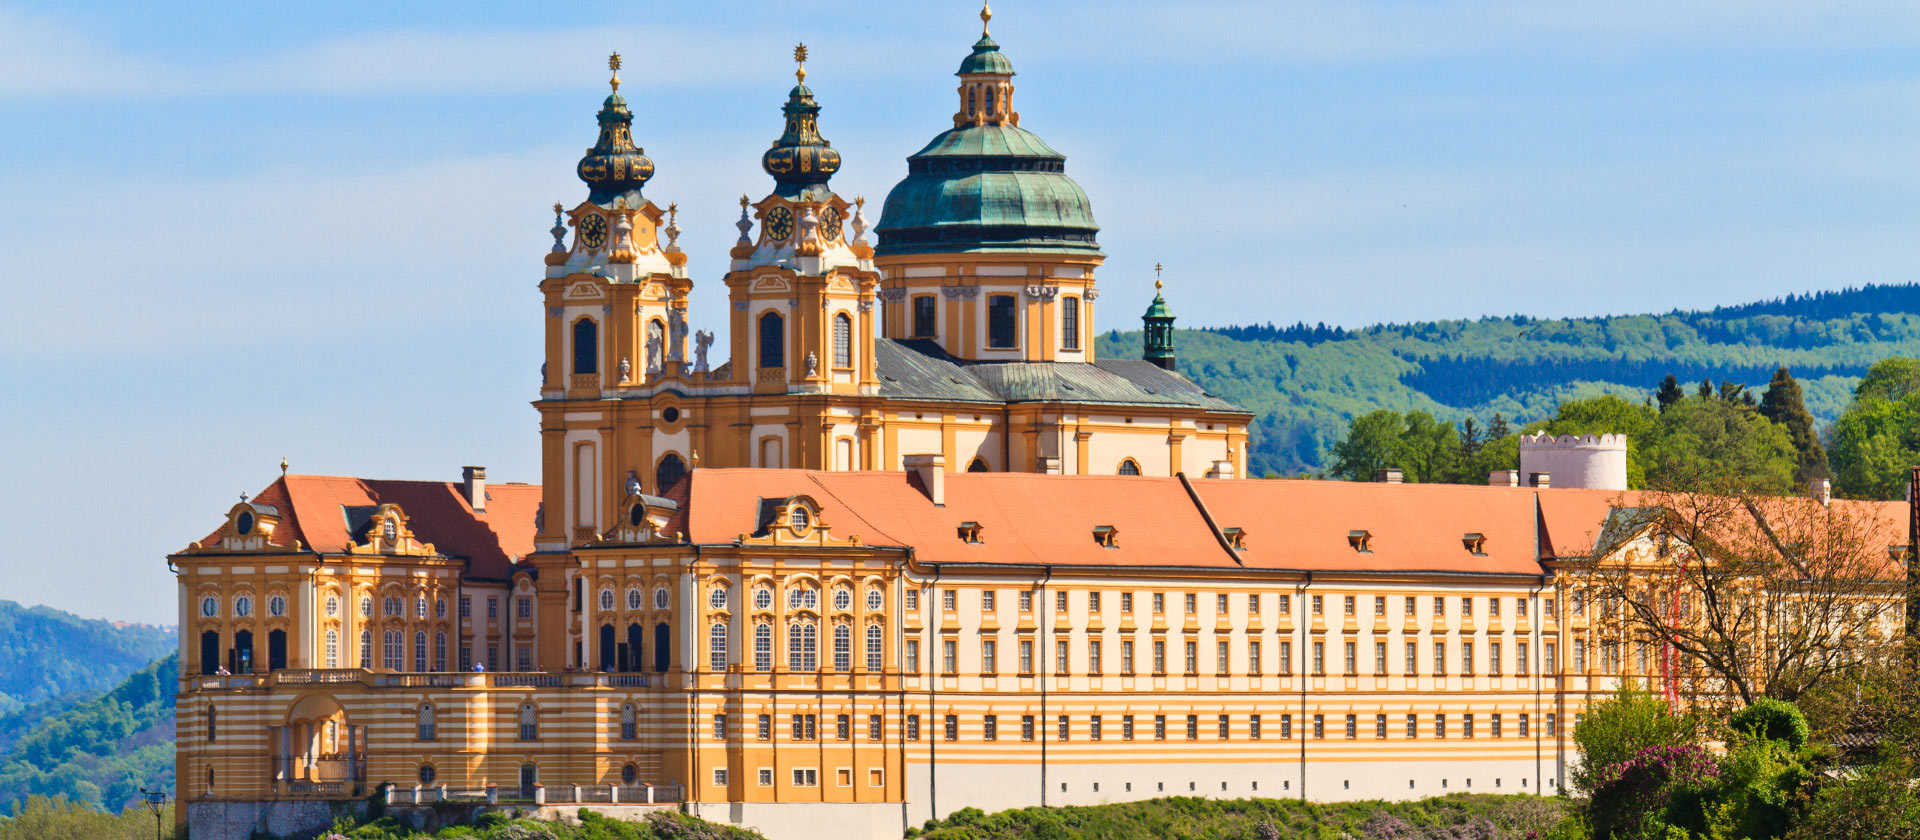 Melk Abbey - a week in Austria itinerary